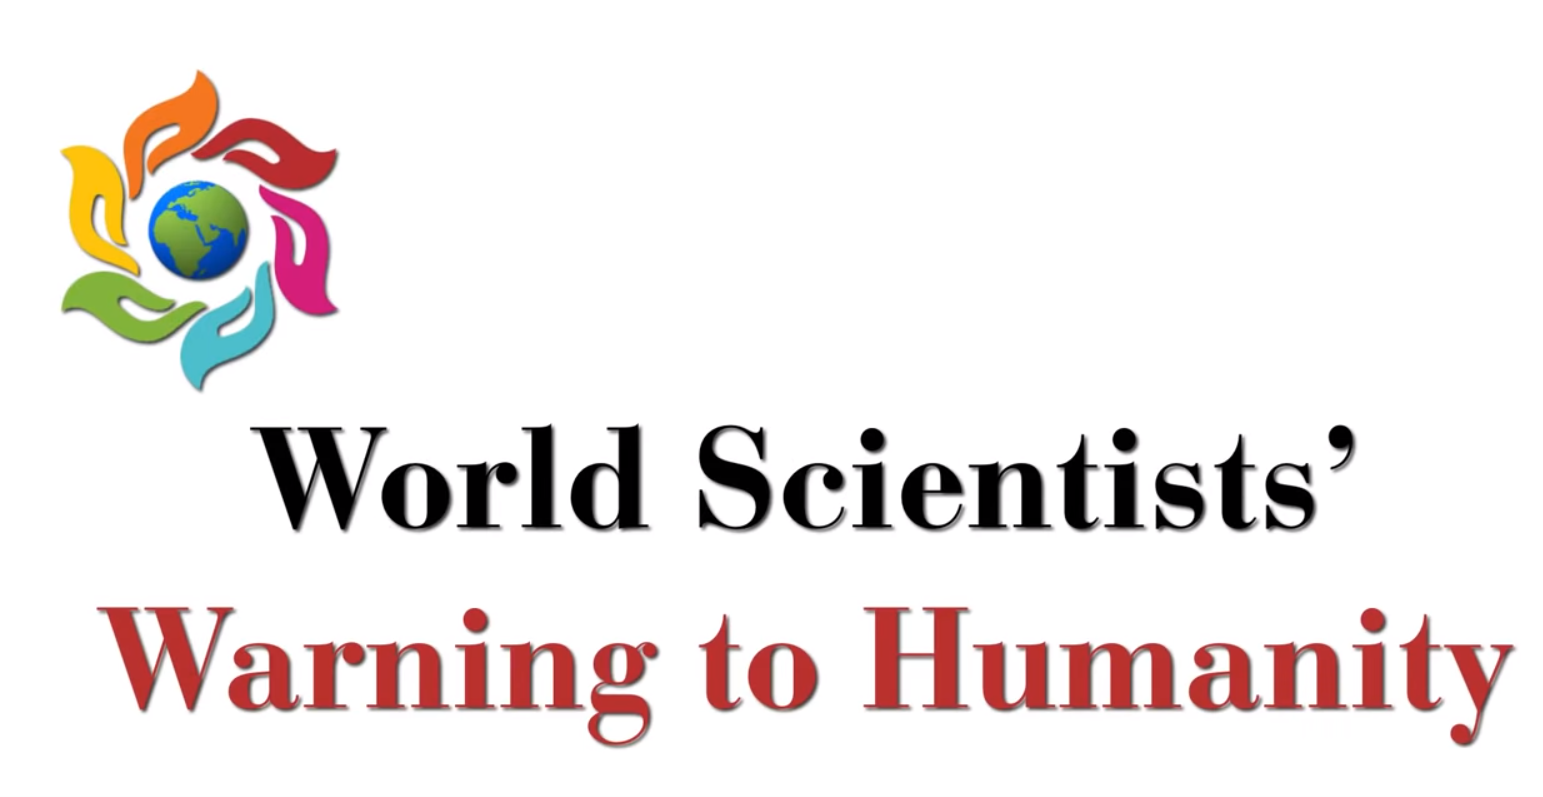 Scientists Warning logo